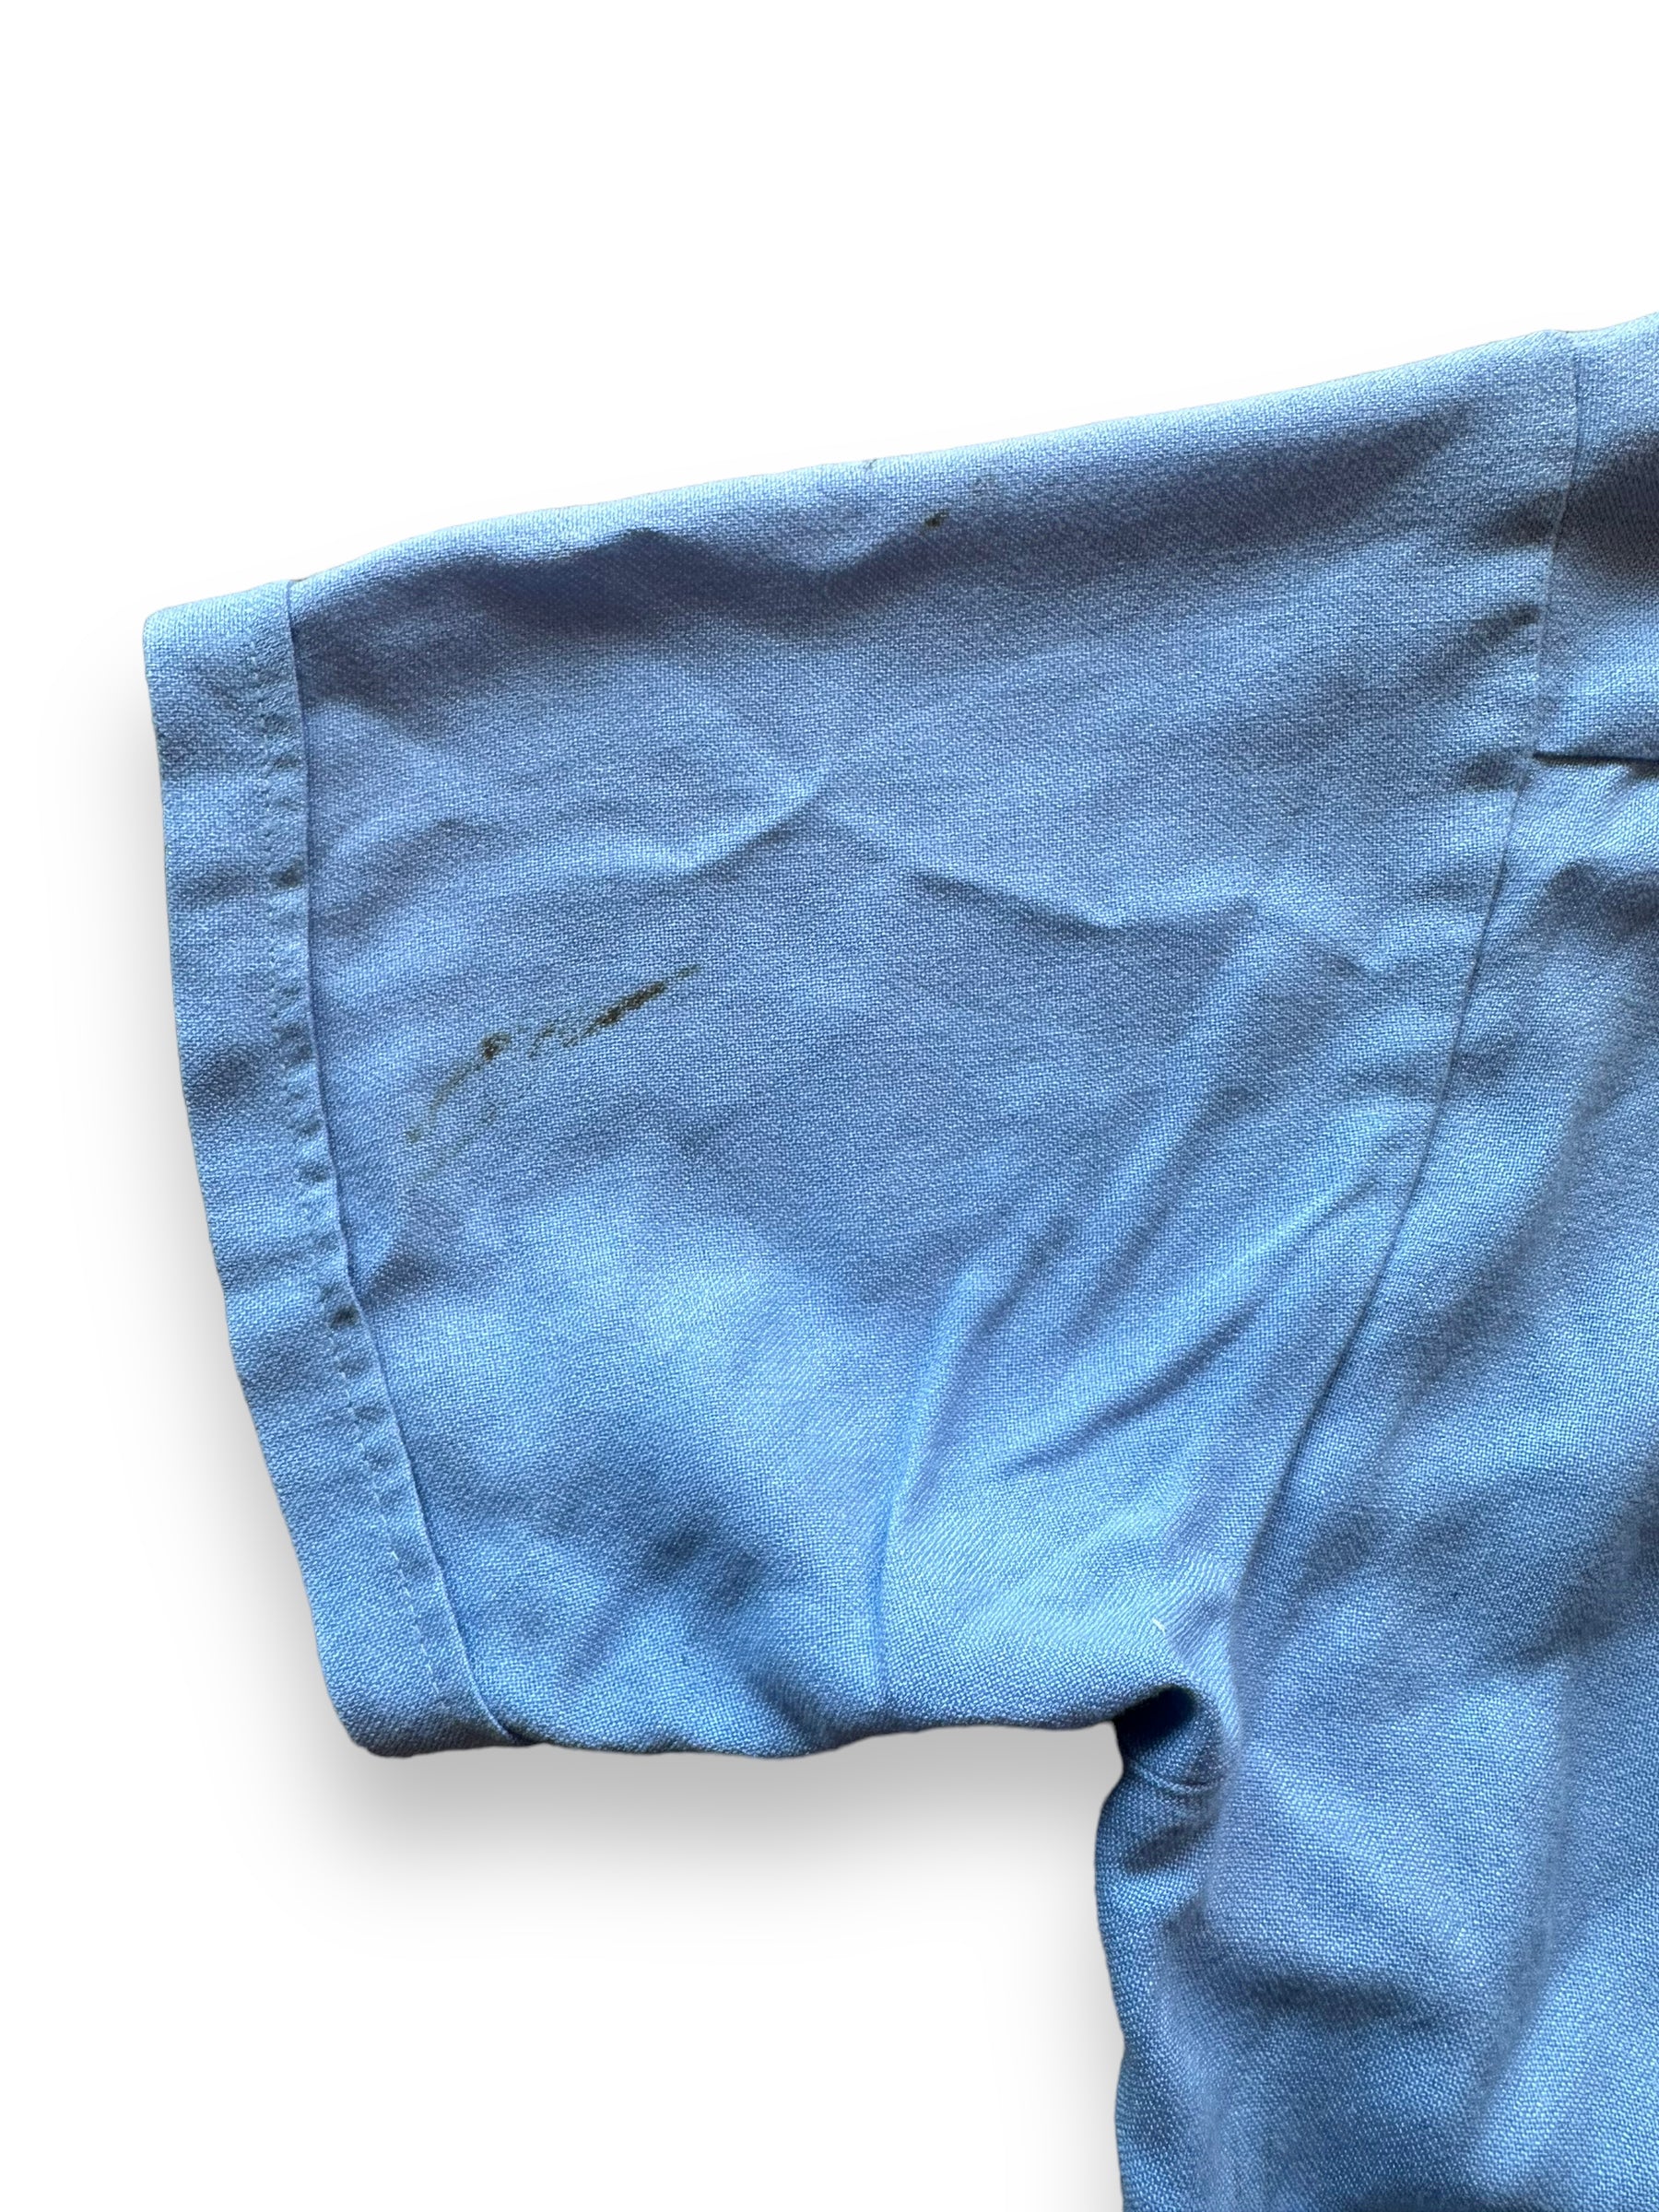 Back left sleeve stains on Vintage "Nile Temple Guard" Chainstitched Bowling Shirt SZ L | Vintage Bowling Shirt Seattle | Barn Owl Vintage Seattle